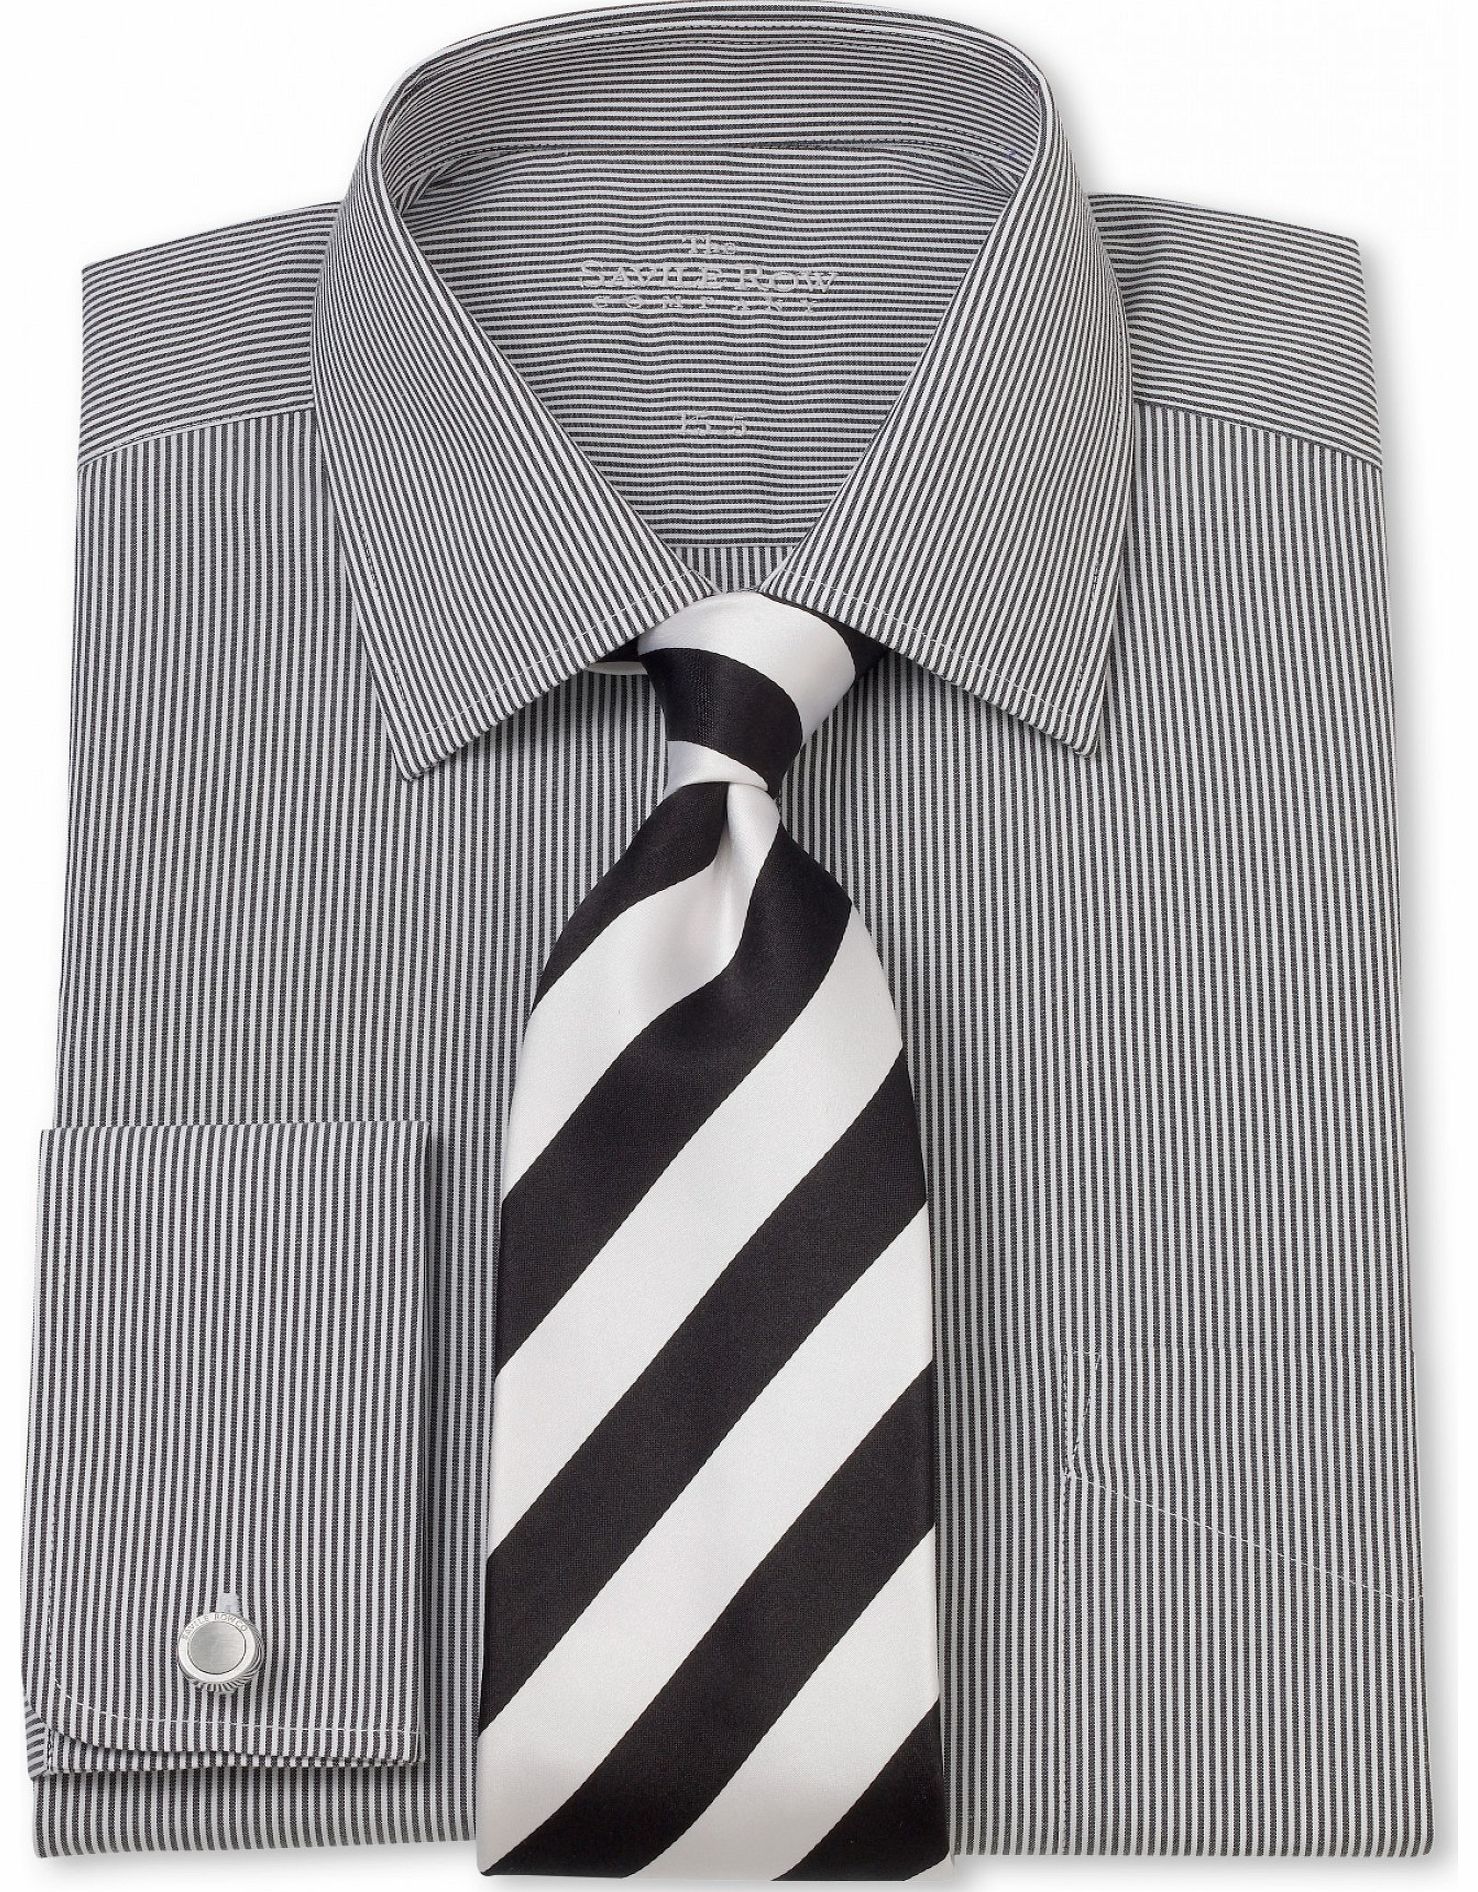 Savile Row Company Black White Bengal Stripe Classic Fit Shirt 17